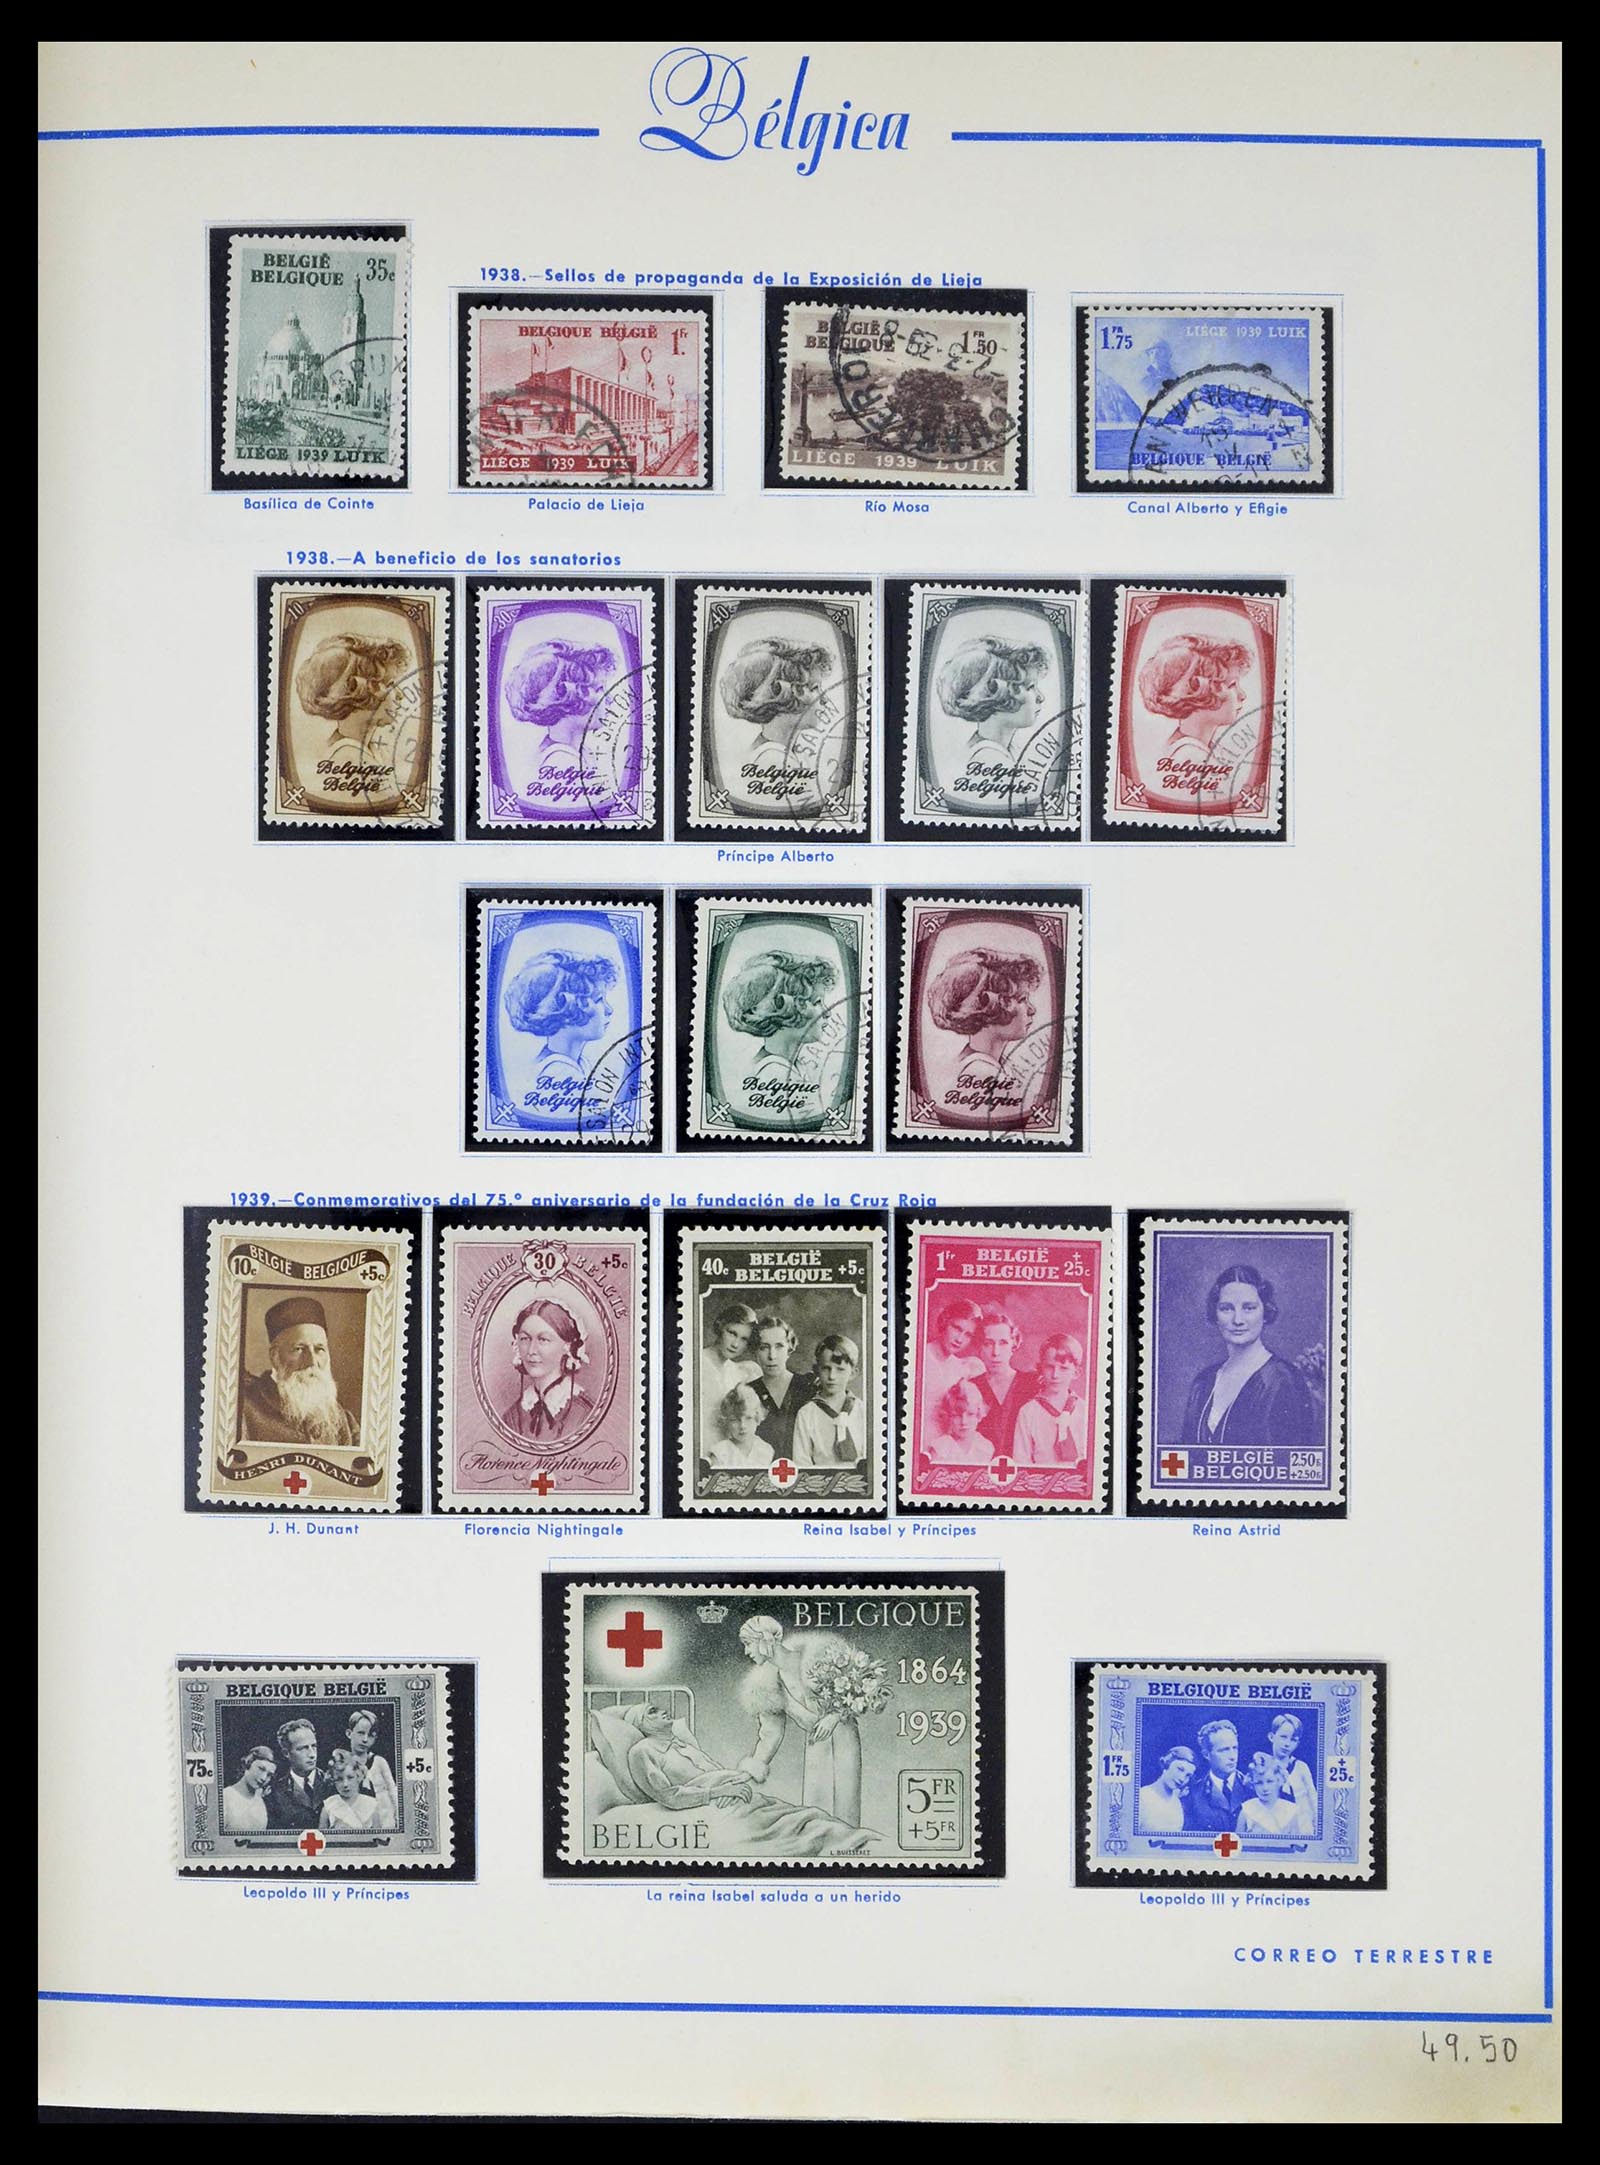 39230 0033 - Stamp collection 39230 Belgium 1849-1976.